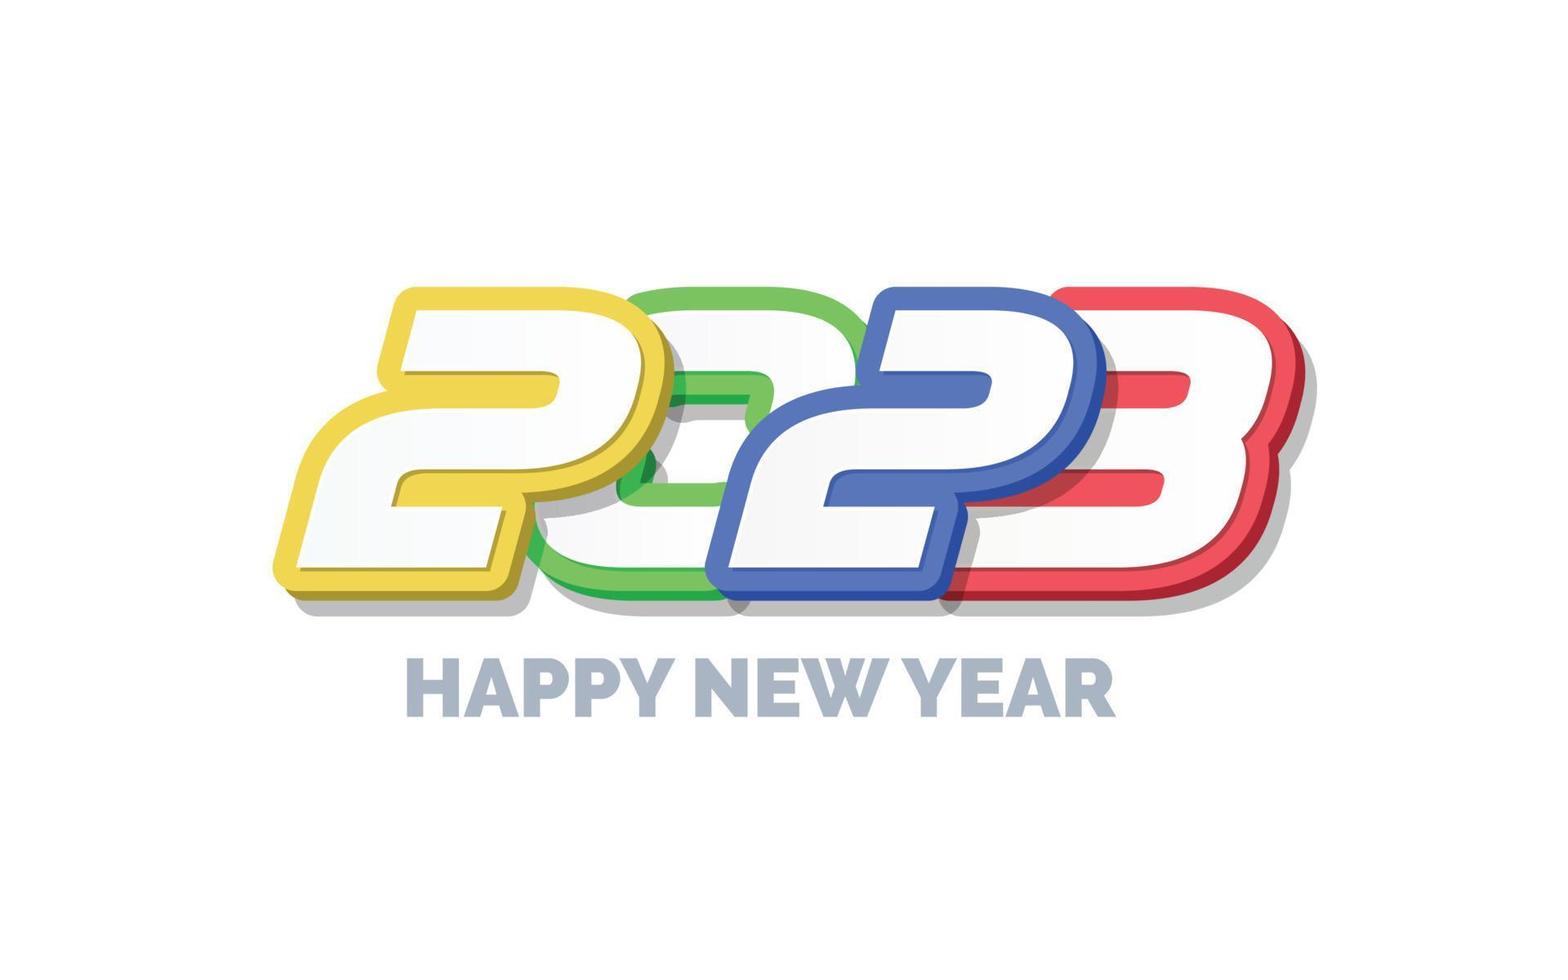 3D Happy new year 2023 logo design vector